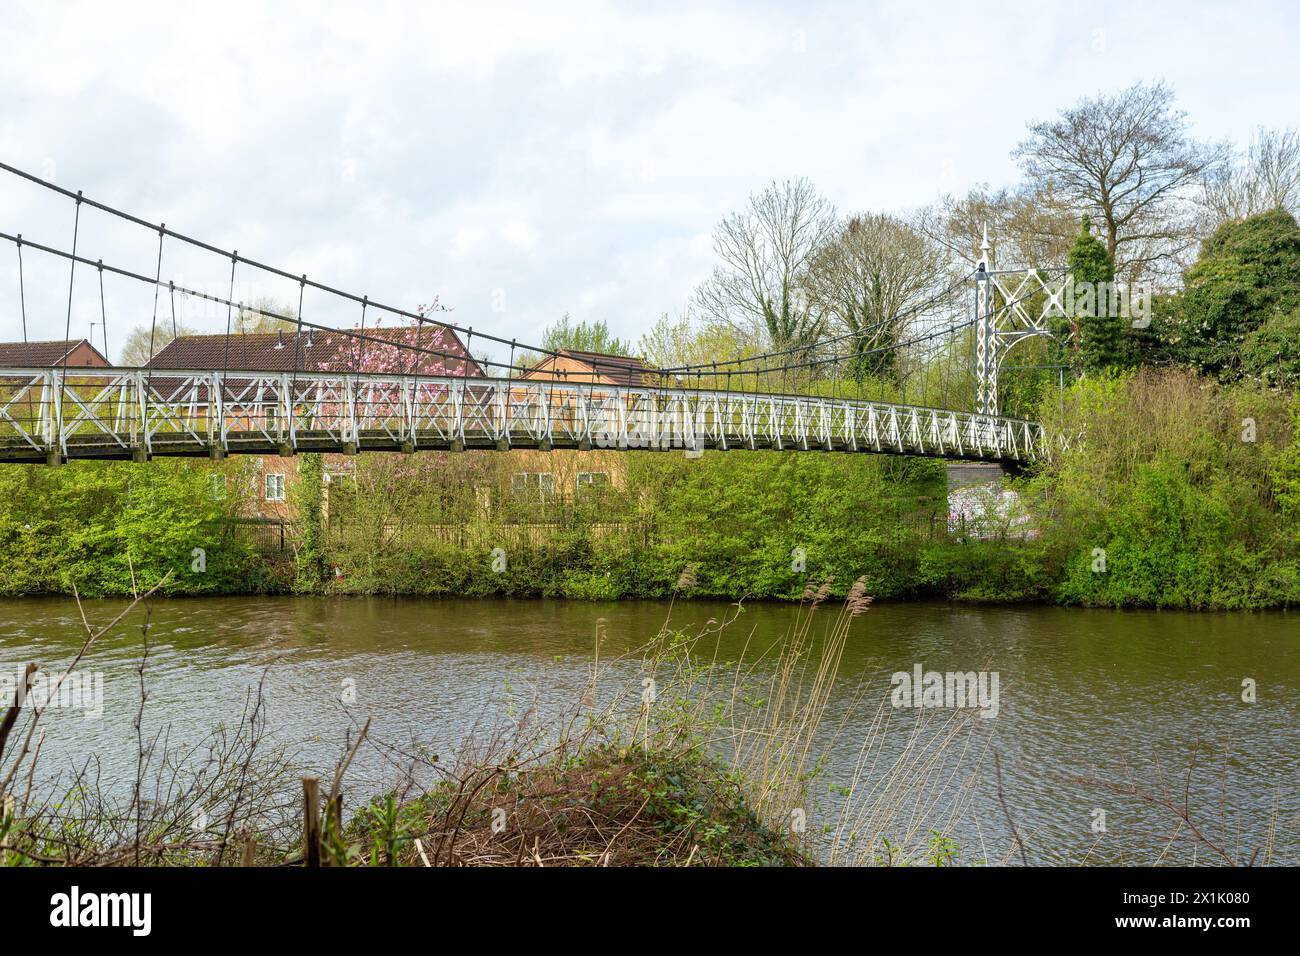 Howley ponte sospeso una passerella sul fiume Mersey a Warrington Foto Stock